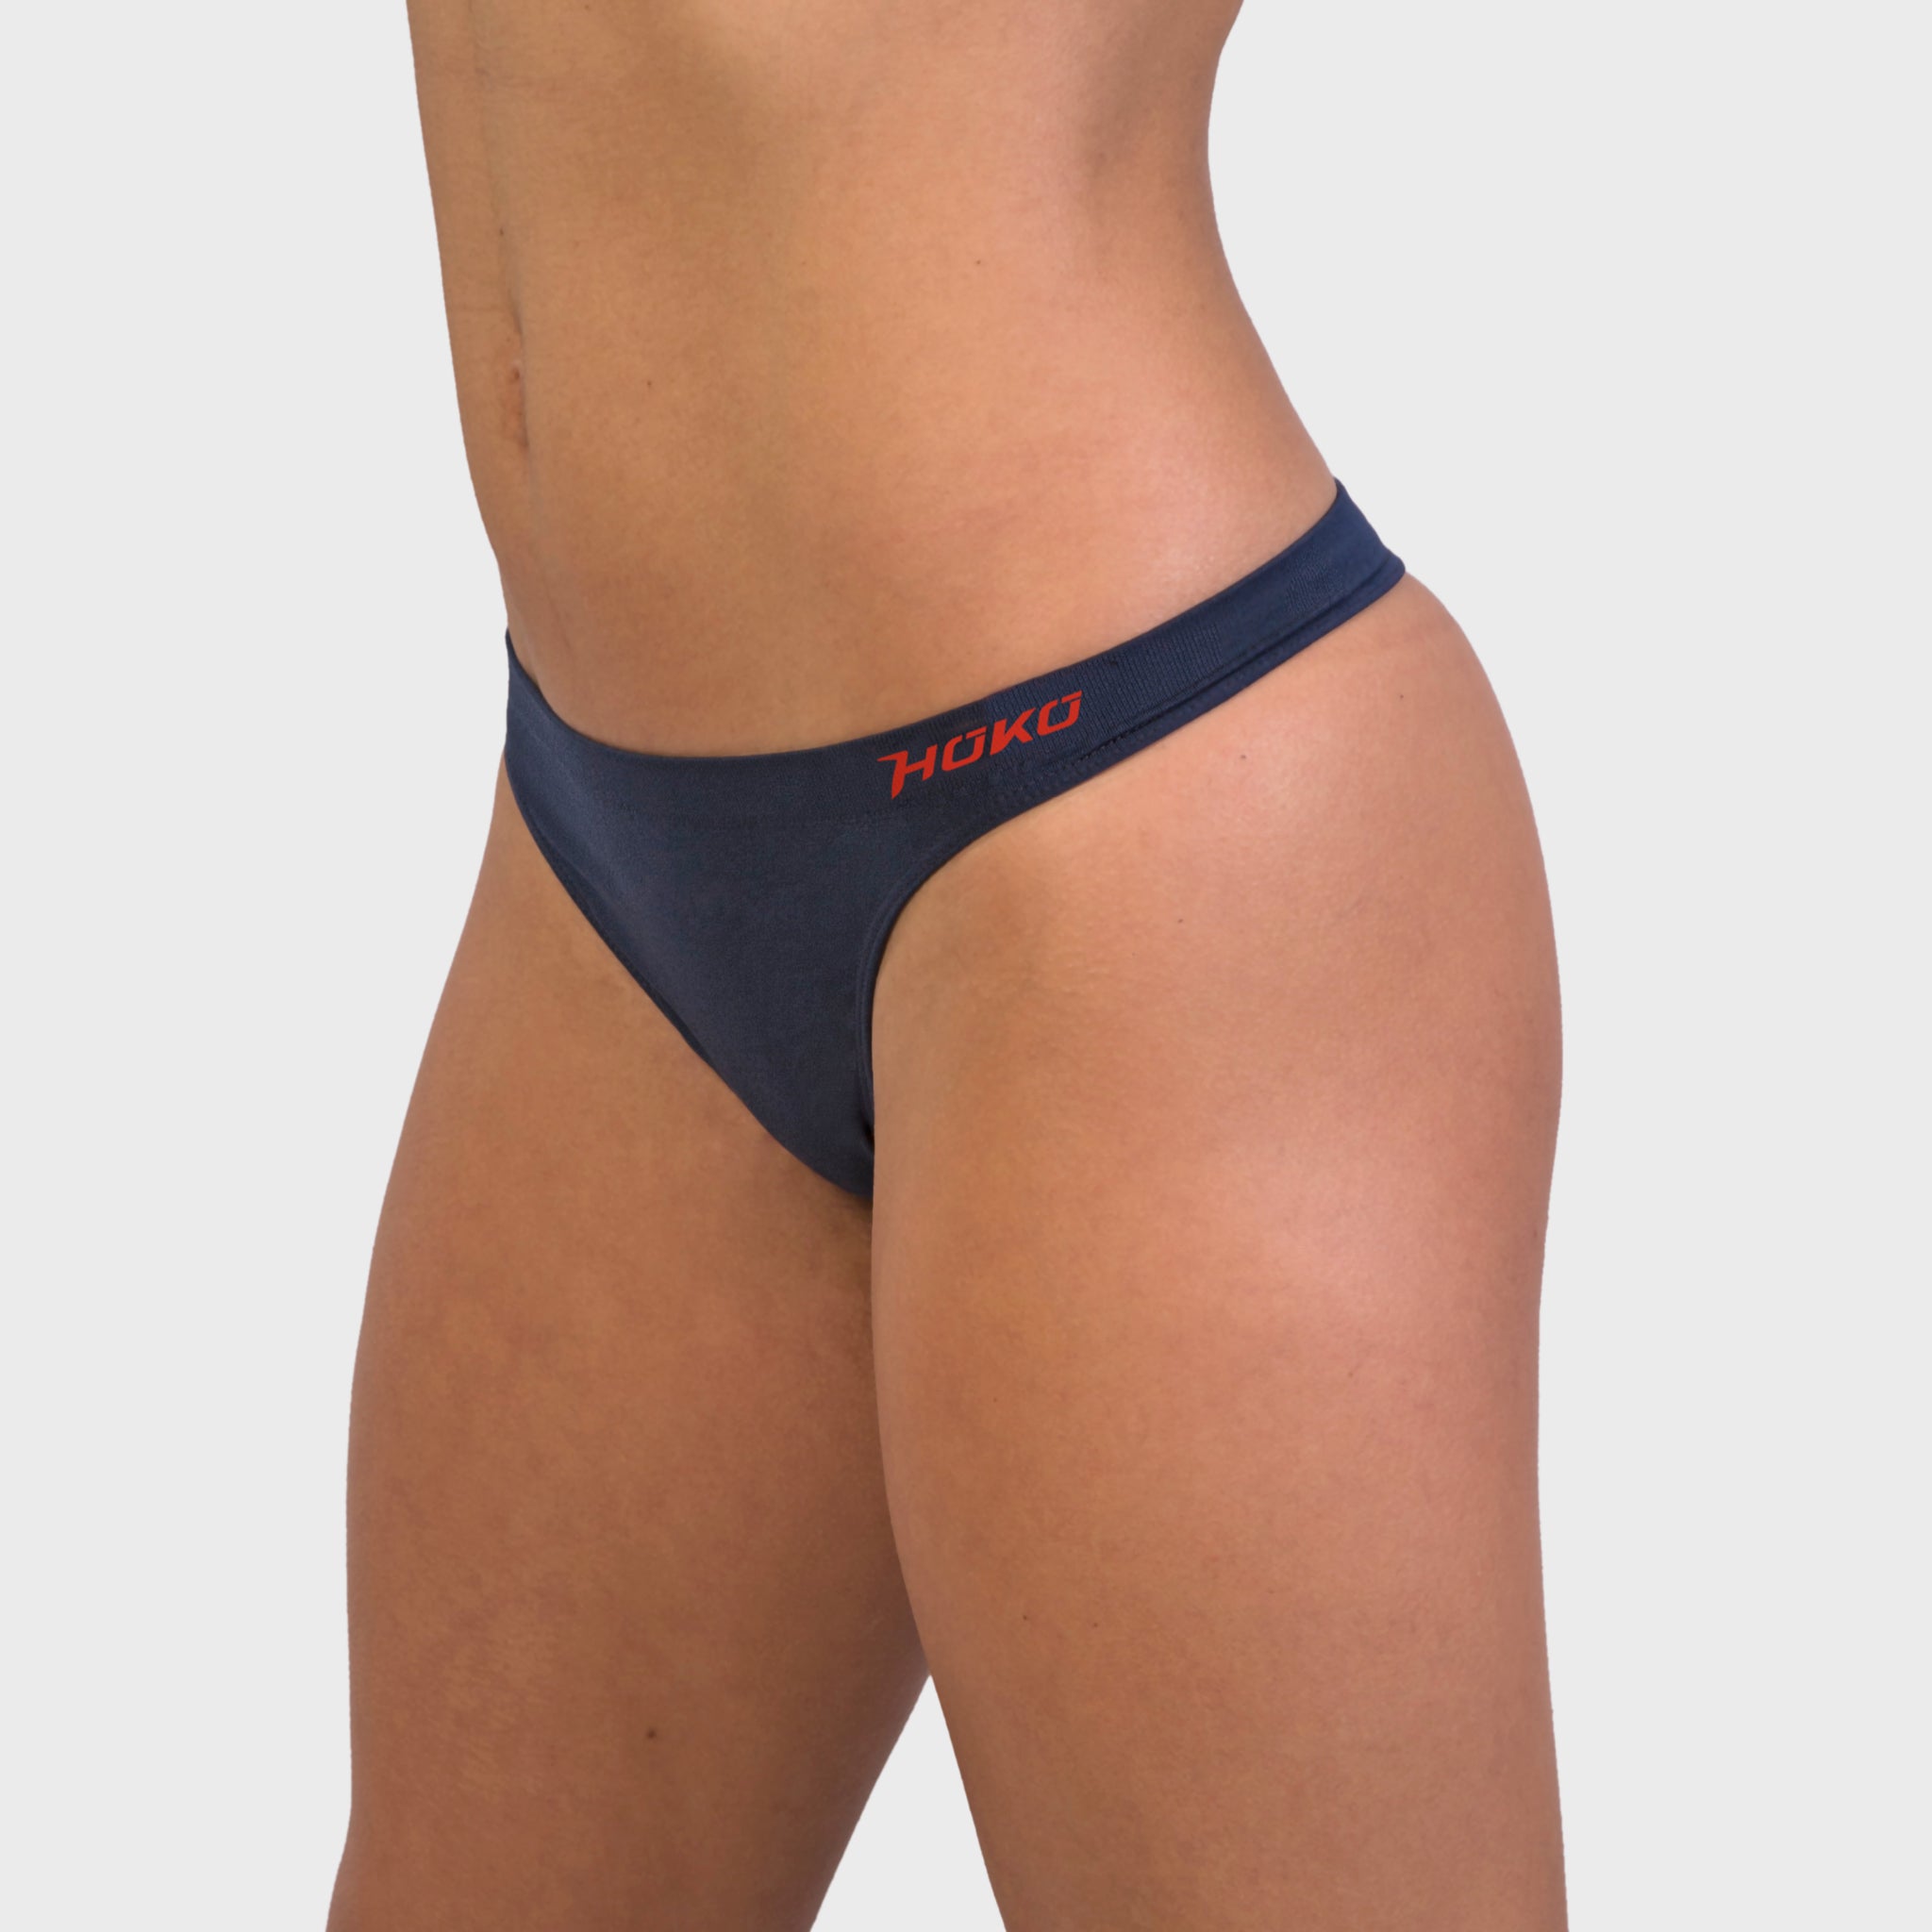 Nana Women's Thong Underwear